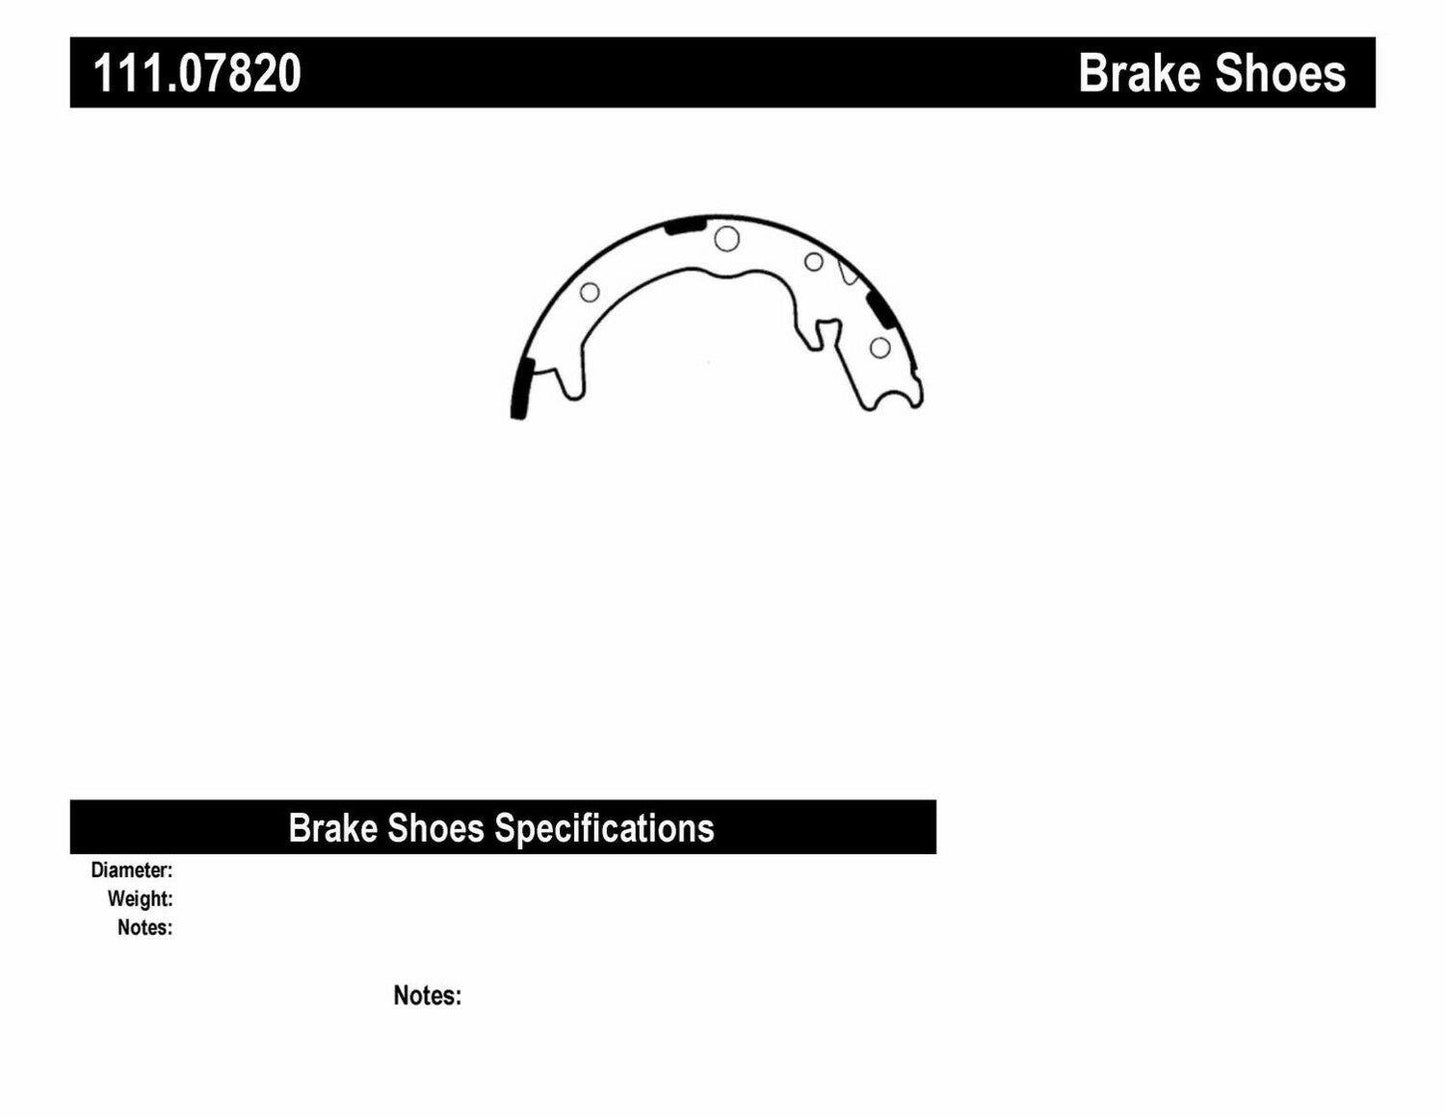 Parking brake shoe and spring kit Fits Honda CRV Element 1995-2011 also Acura